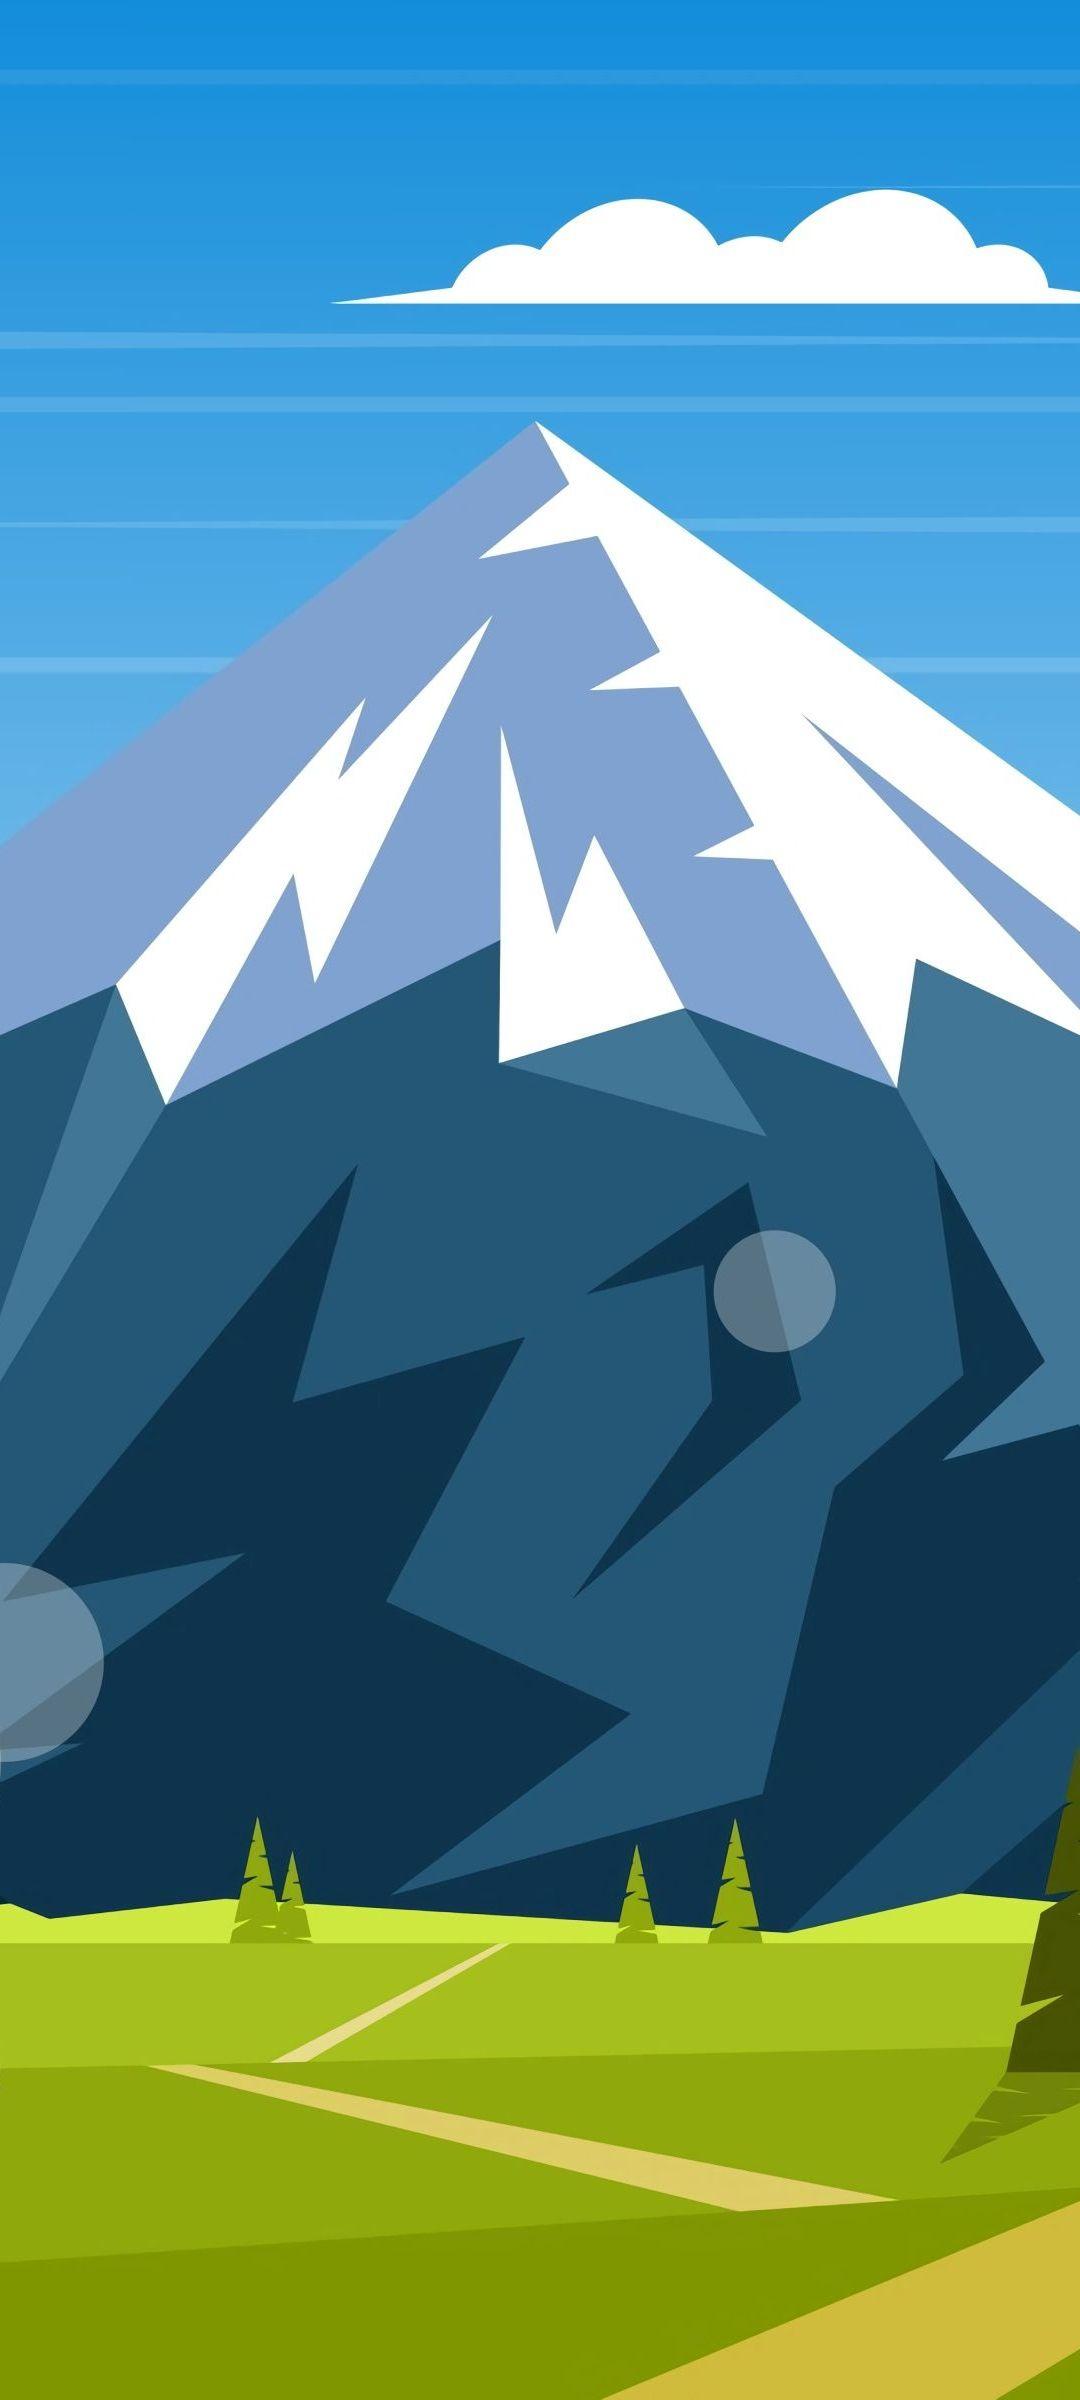 Mountain Vector Wallpapers - Top Free Mountain Vector Backgrounds ...